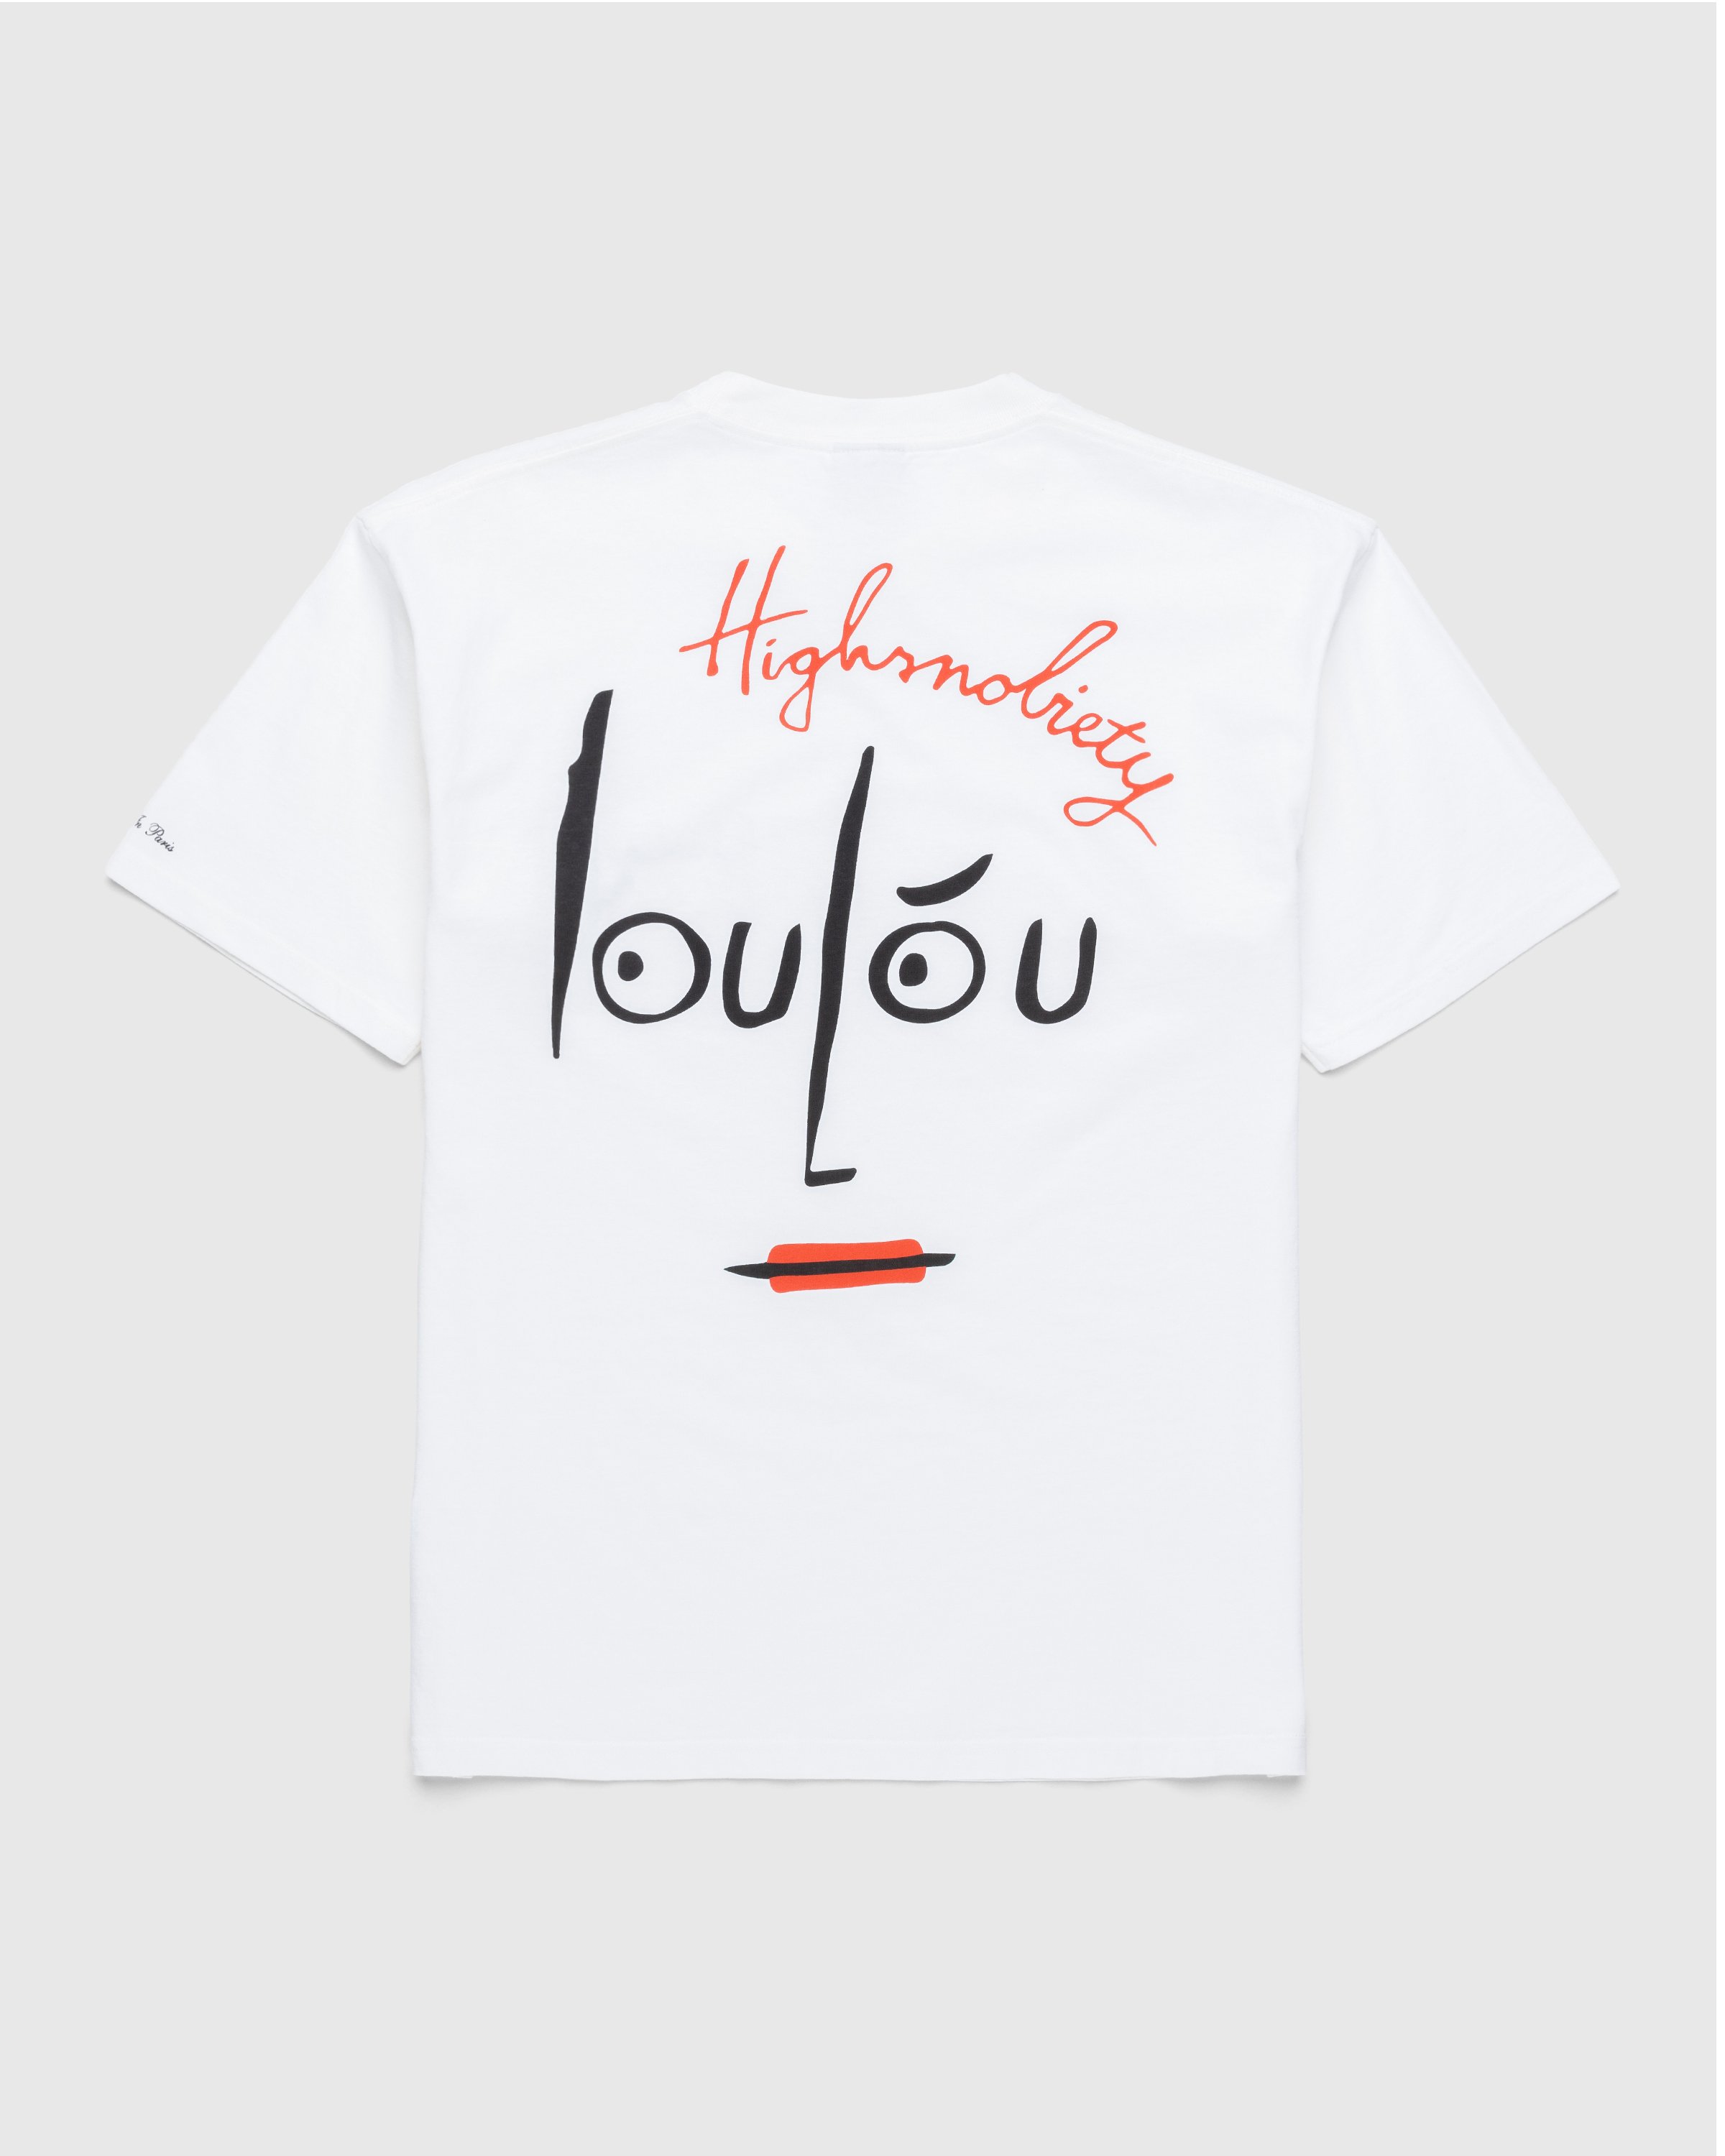 Loulou Paris x Highsnobiety - T-Shirt White - Clothing - White - Image 1